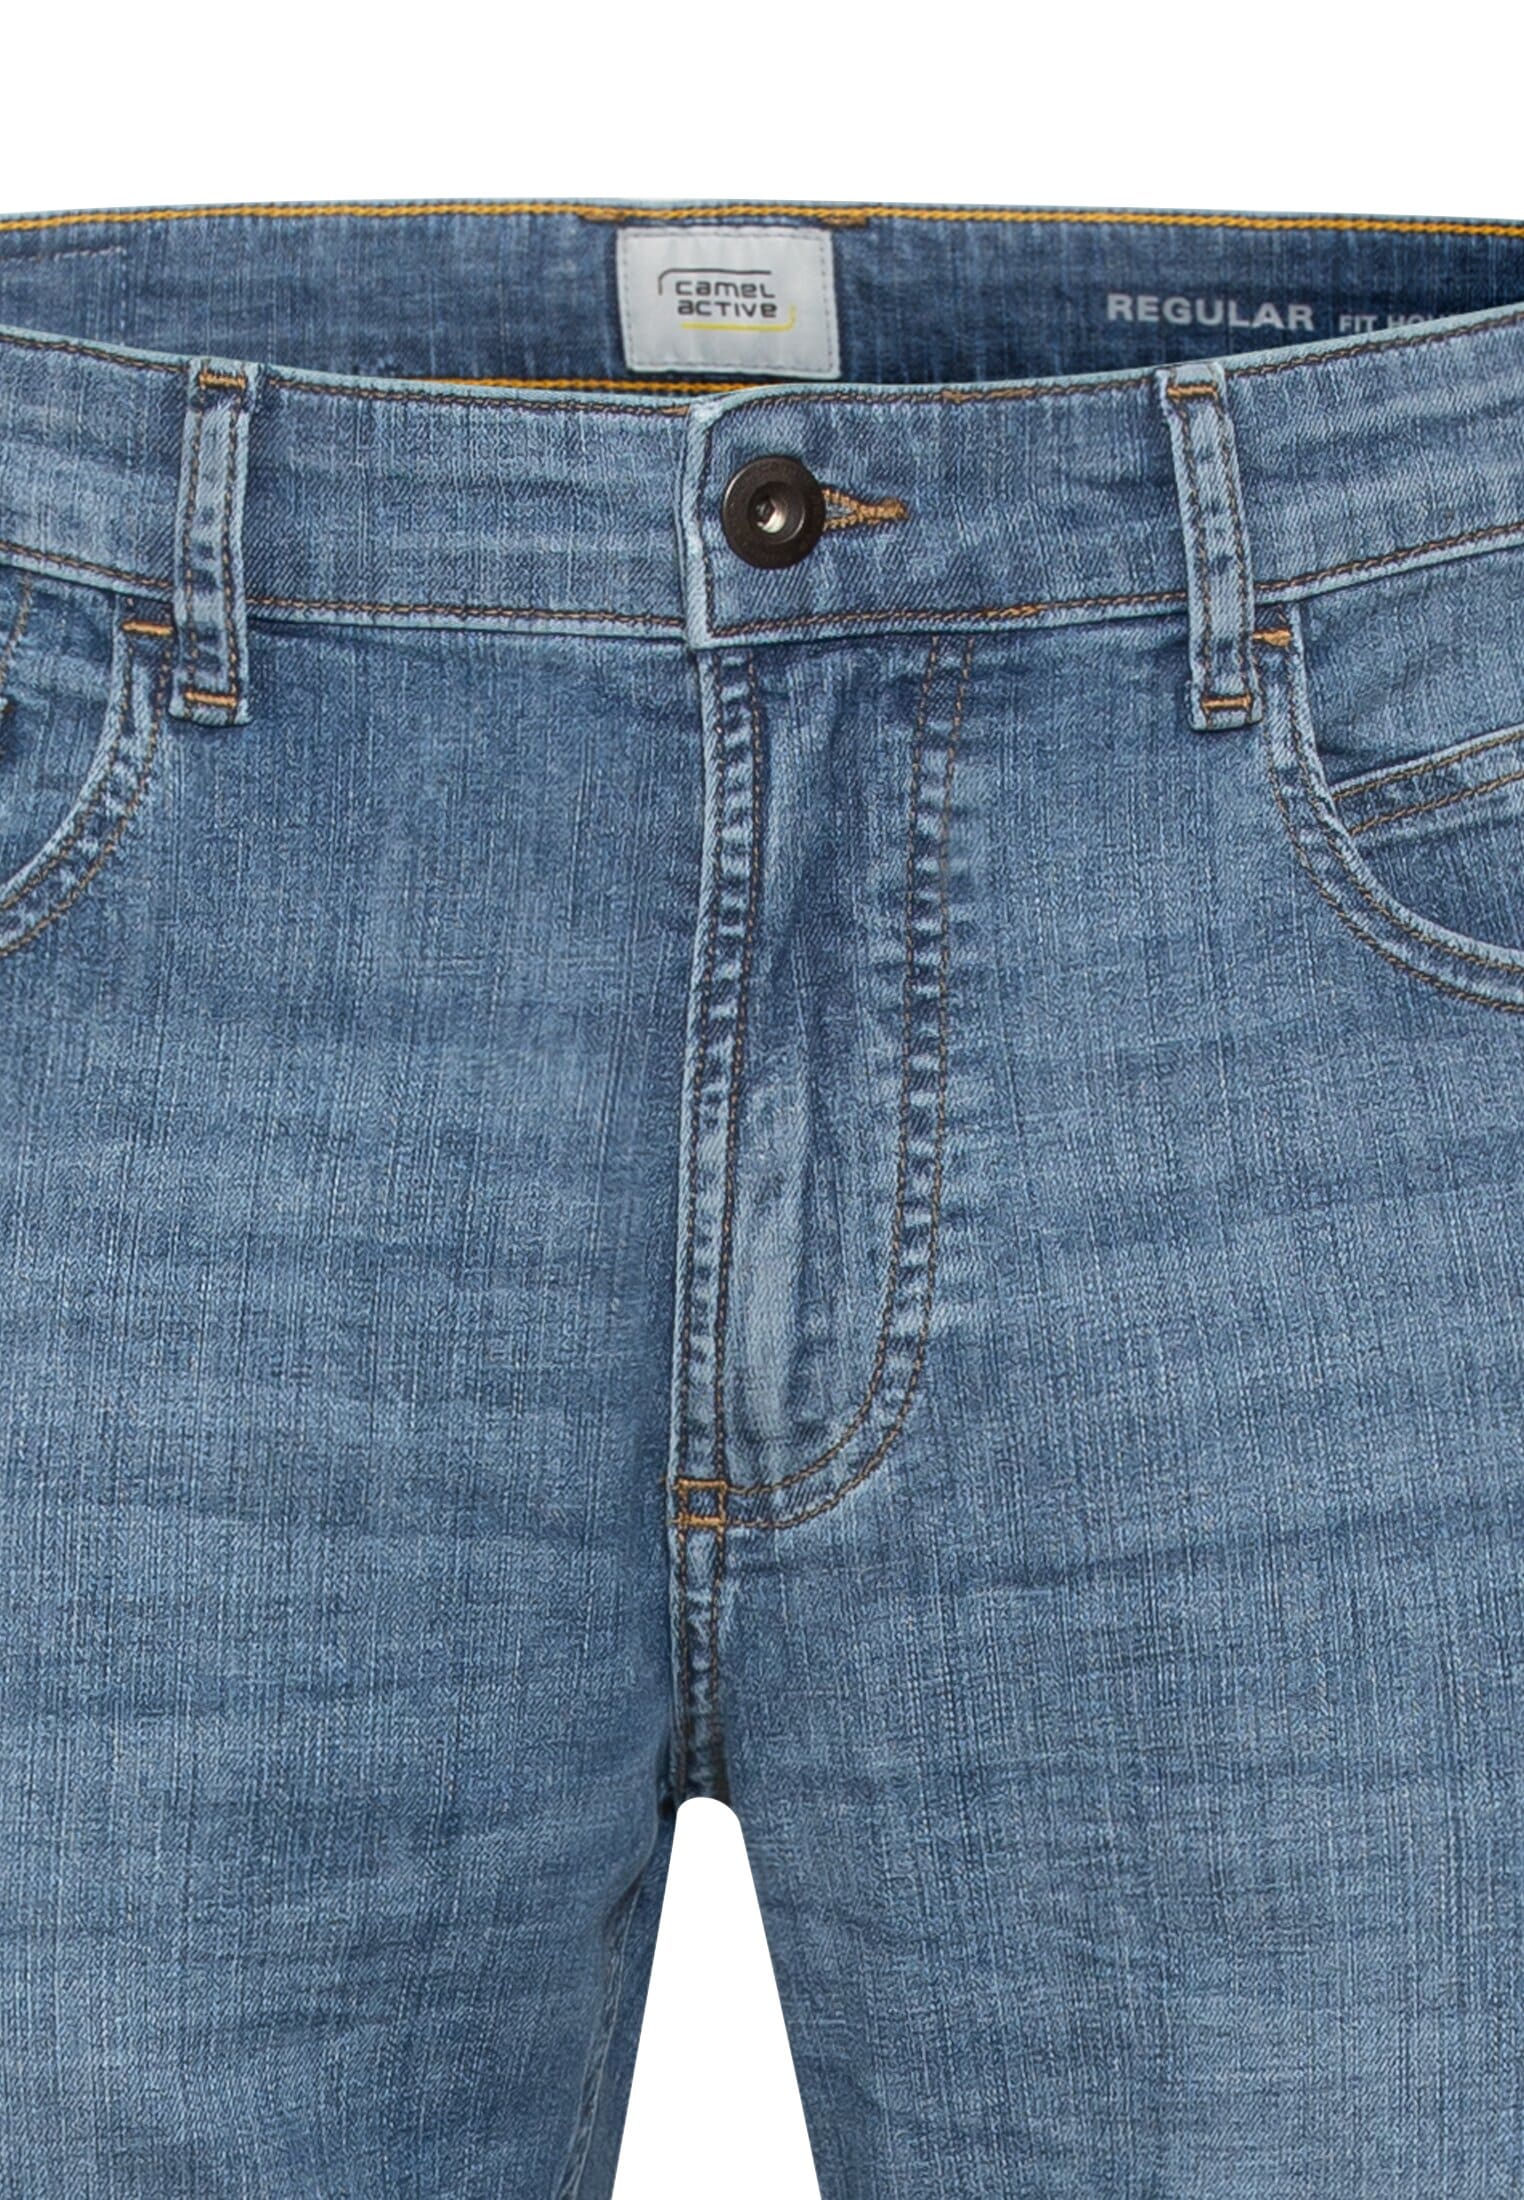 camel active 5-Pocket-Jeans, mit washed Look